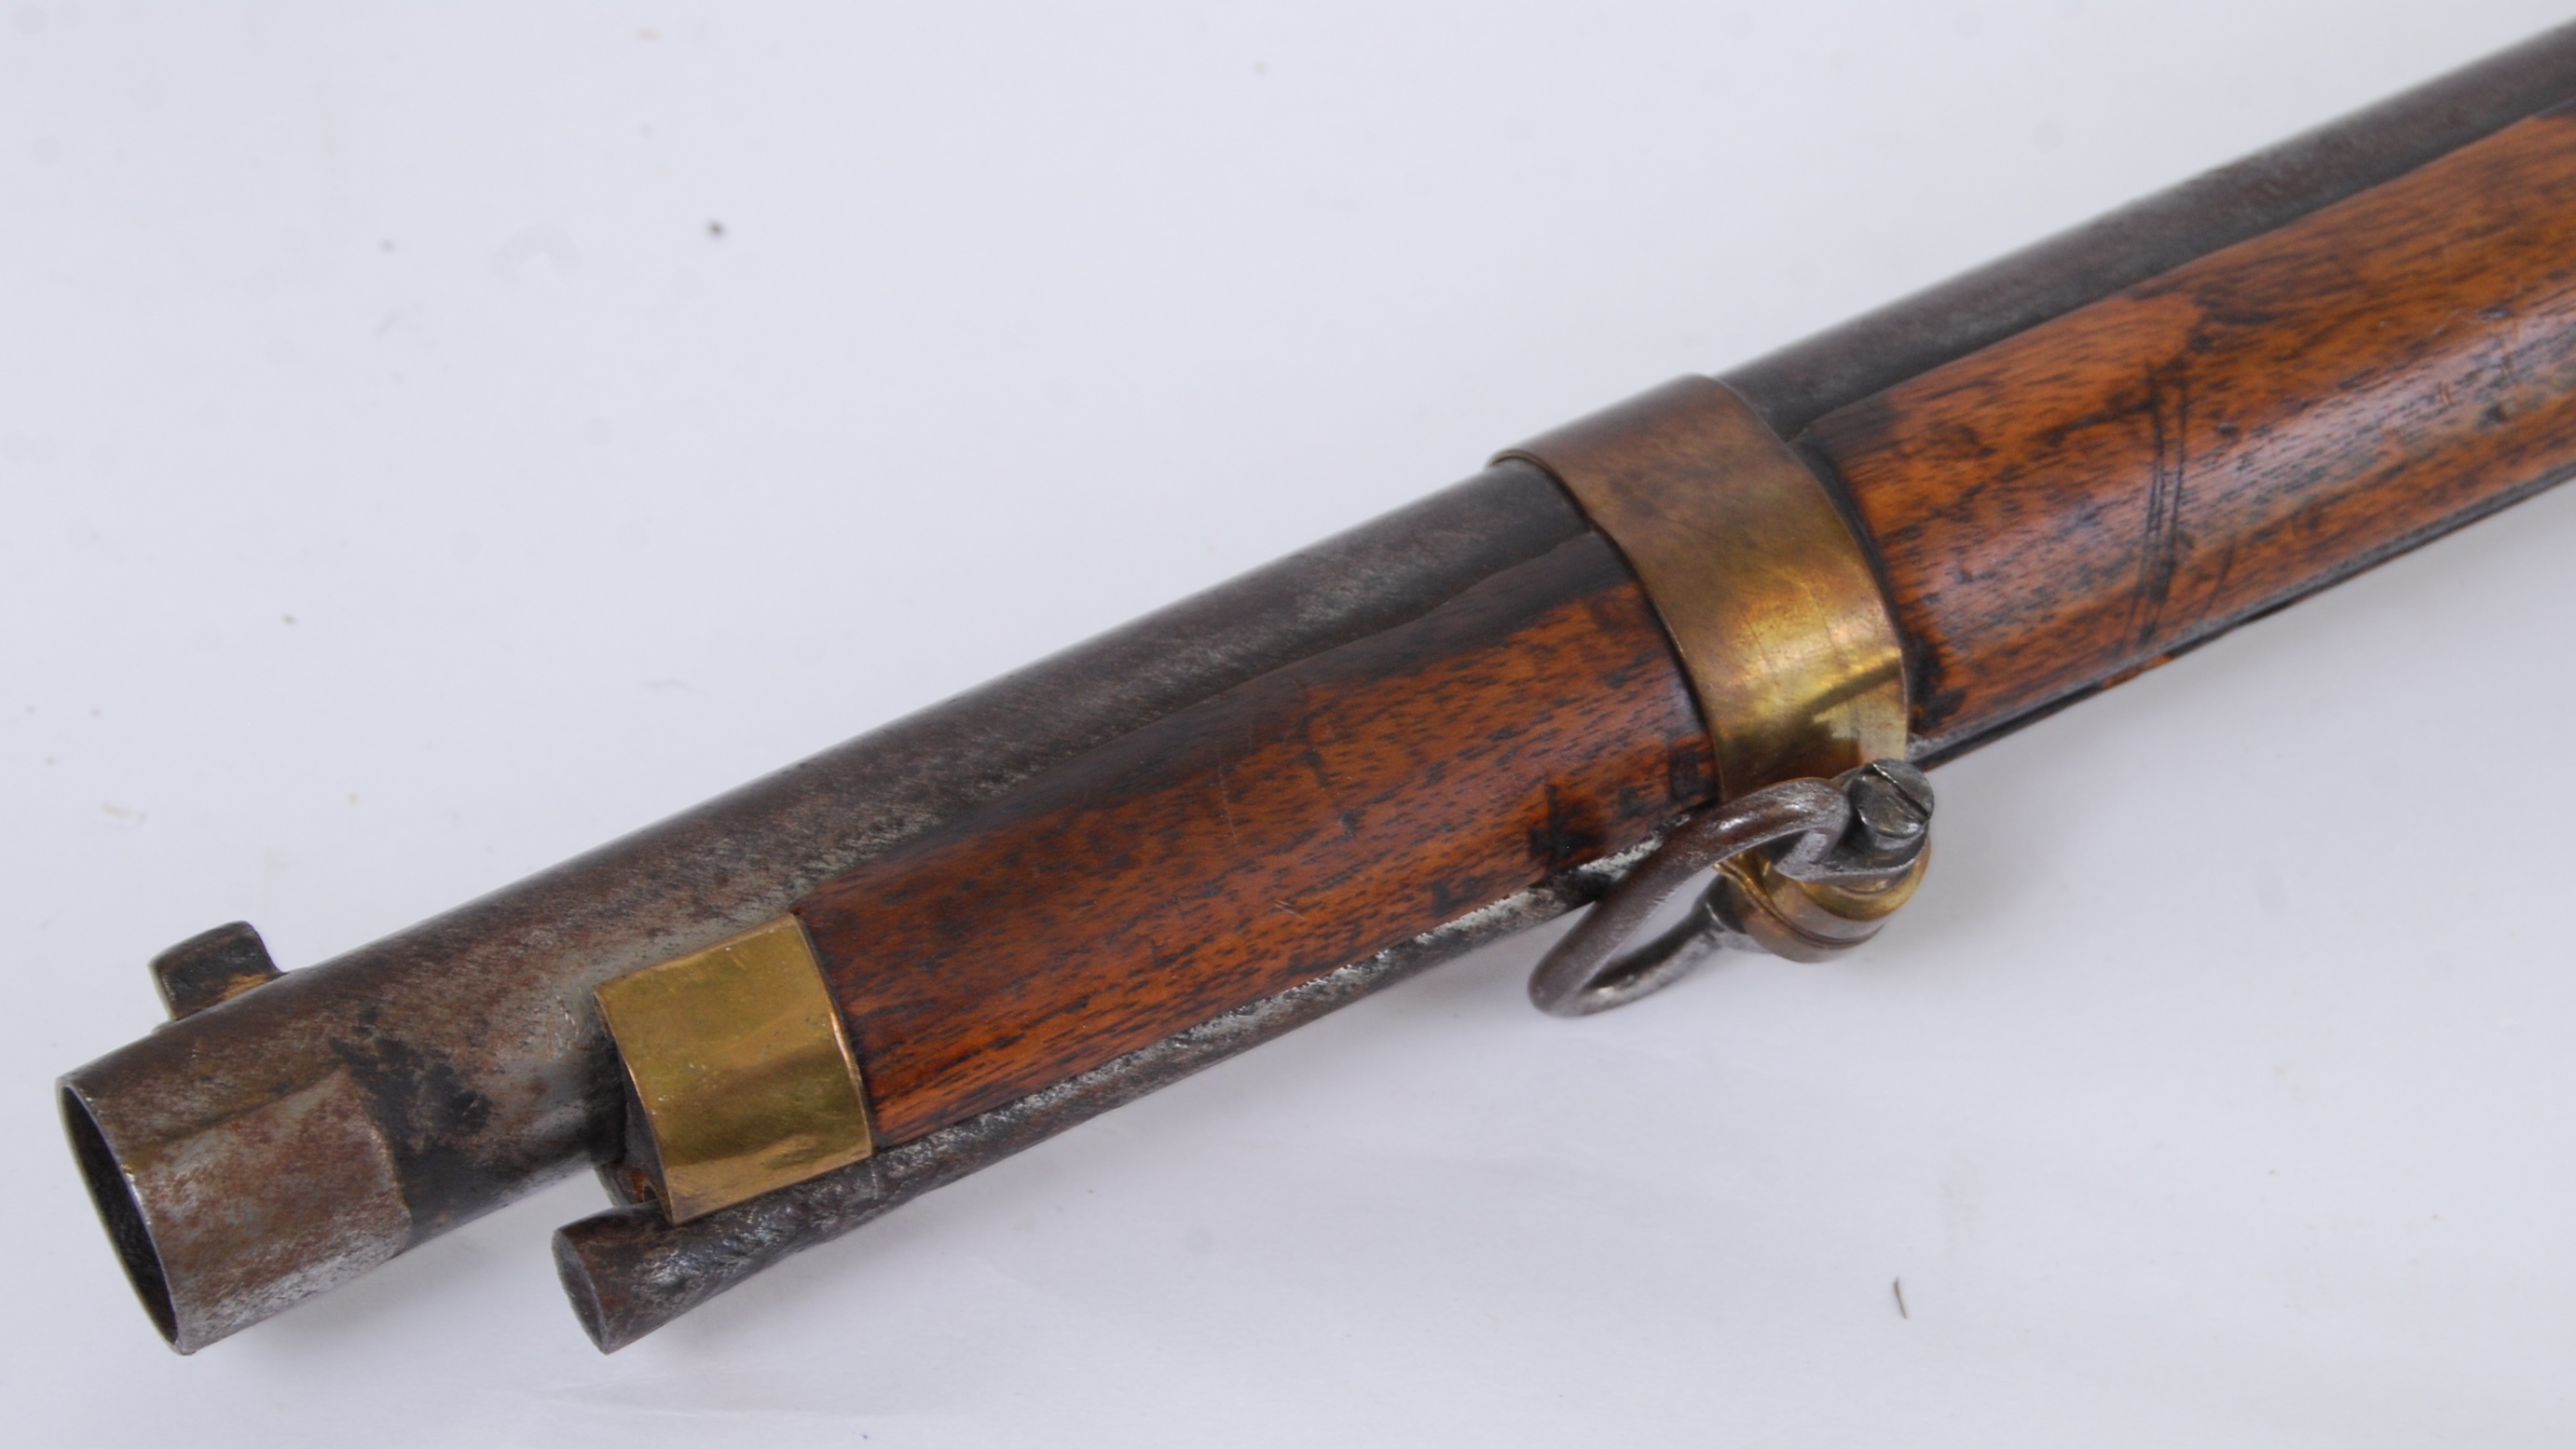 RIFLE: A 19th century percussion cap rifle gun, - Image 4 of 4